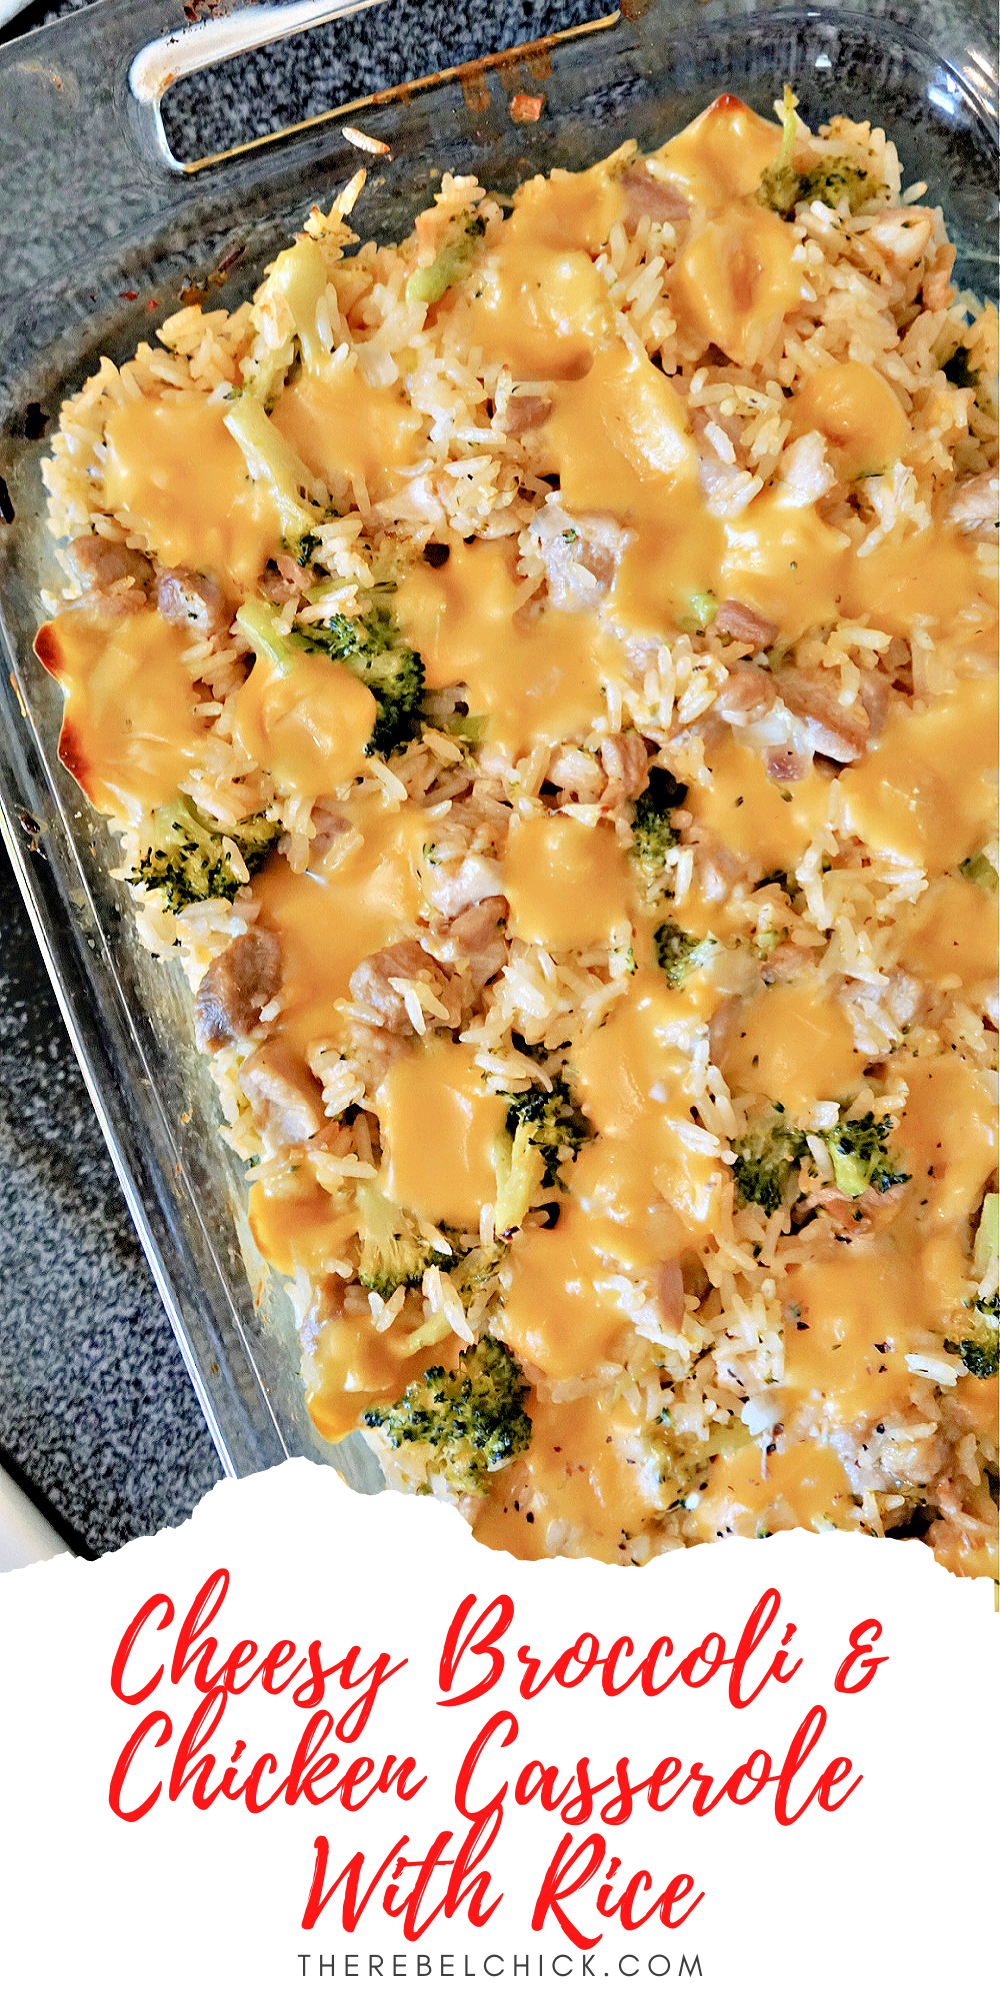 Velveeta Cheesy Broccoli & Chicken Casserole With Rice